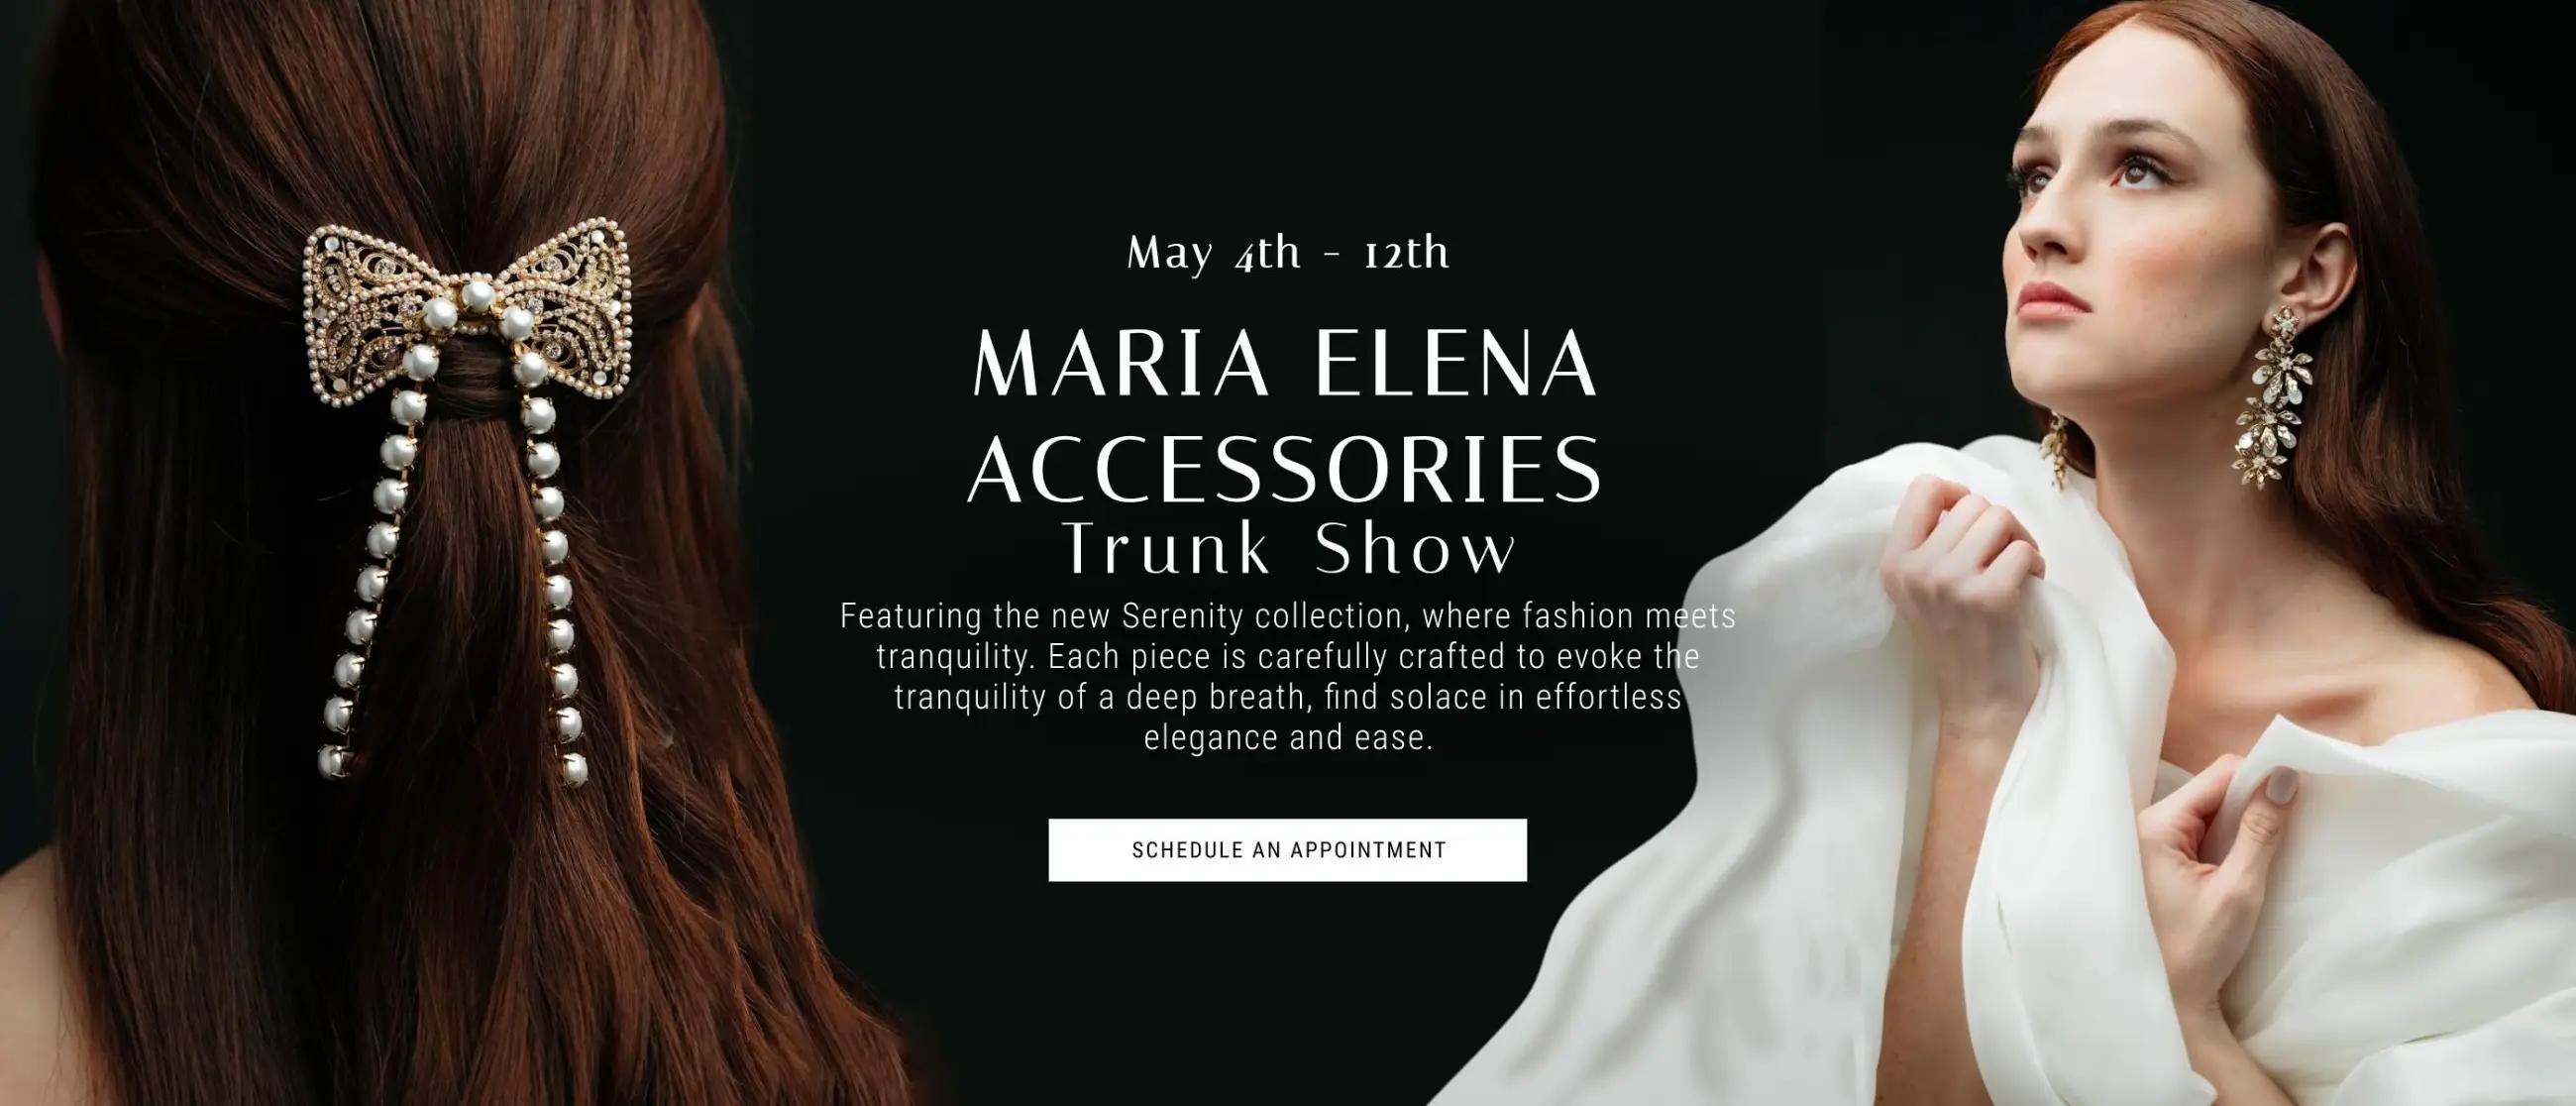 Maria Elena Accessories Trunk Show Banner Desktop